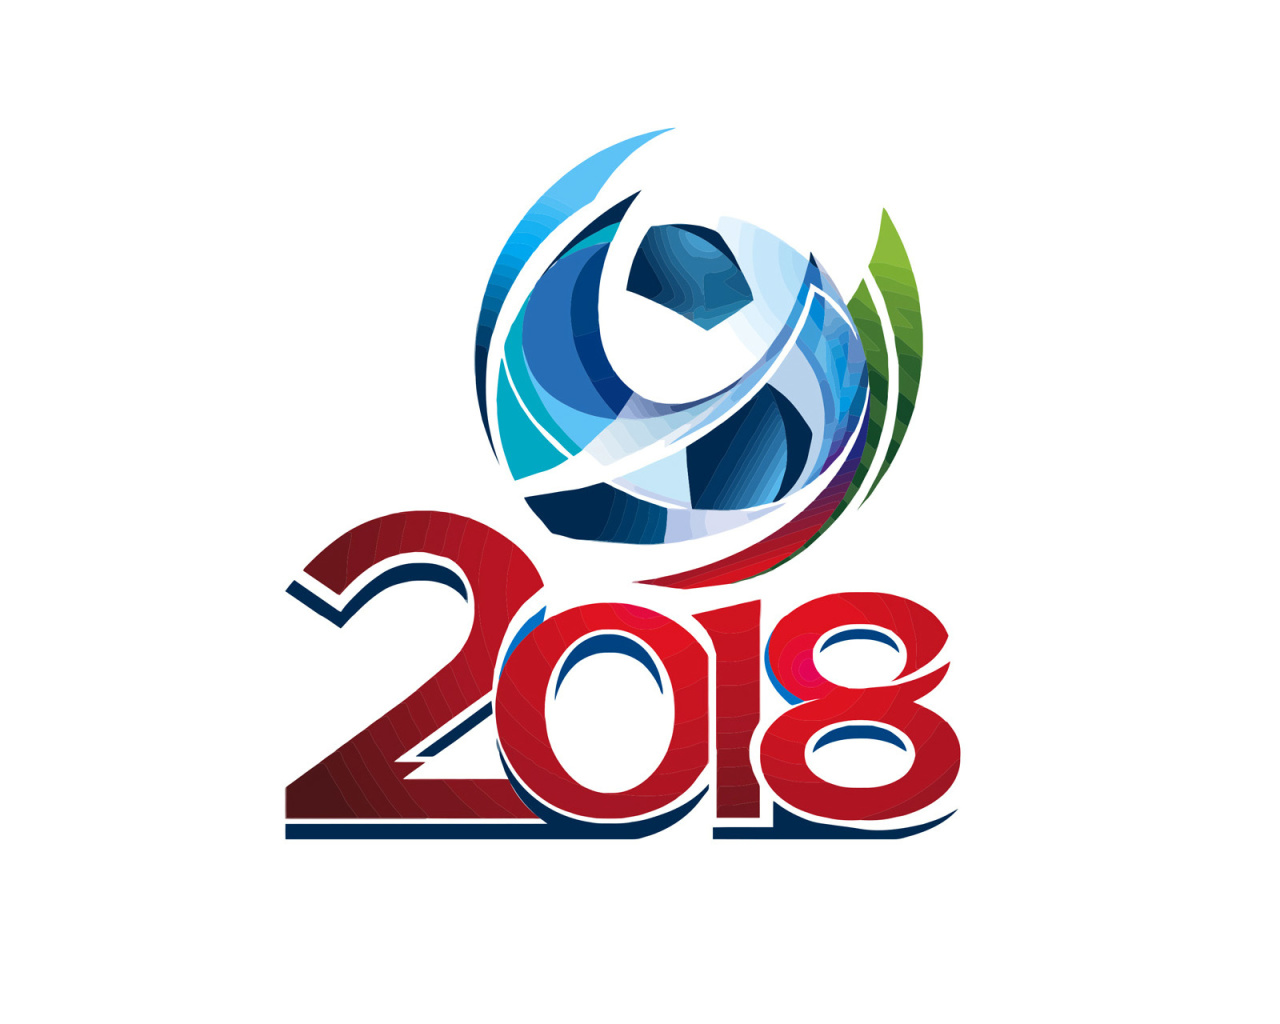 2018 FIFA World Cup in Russia wallpaper 1280x1024